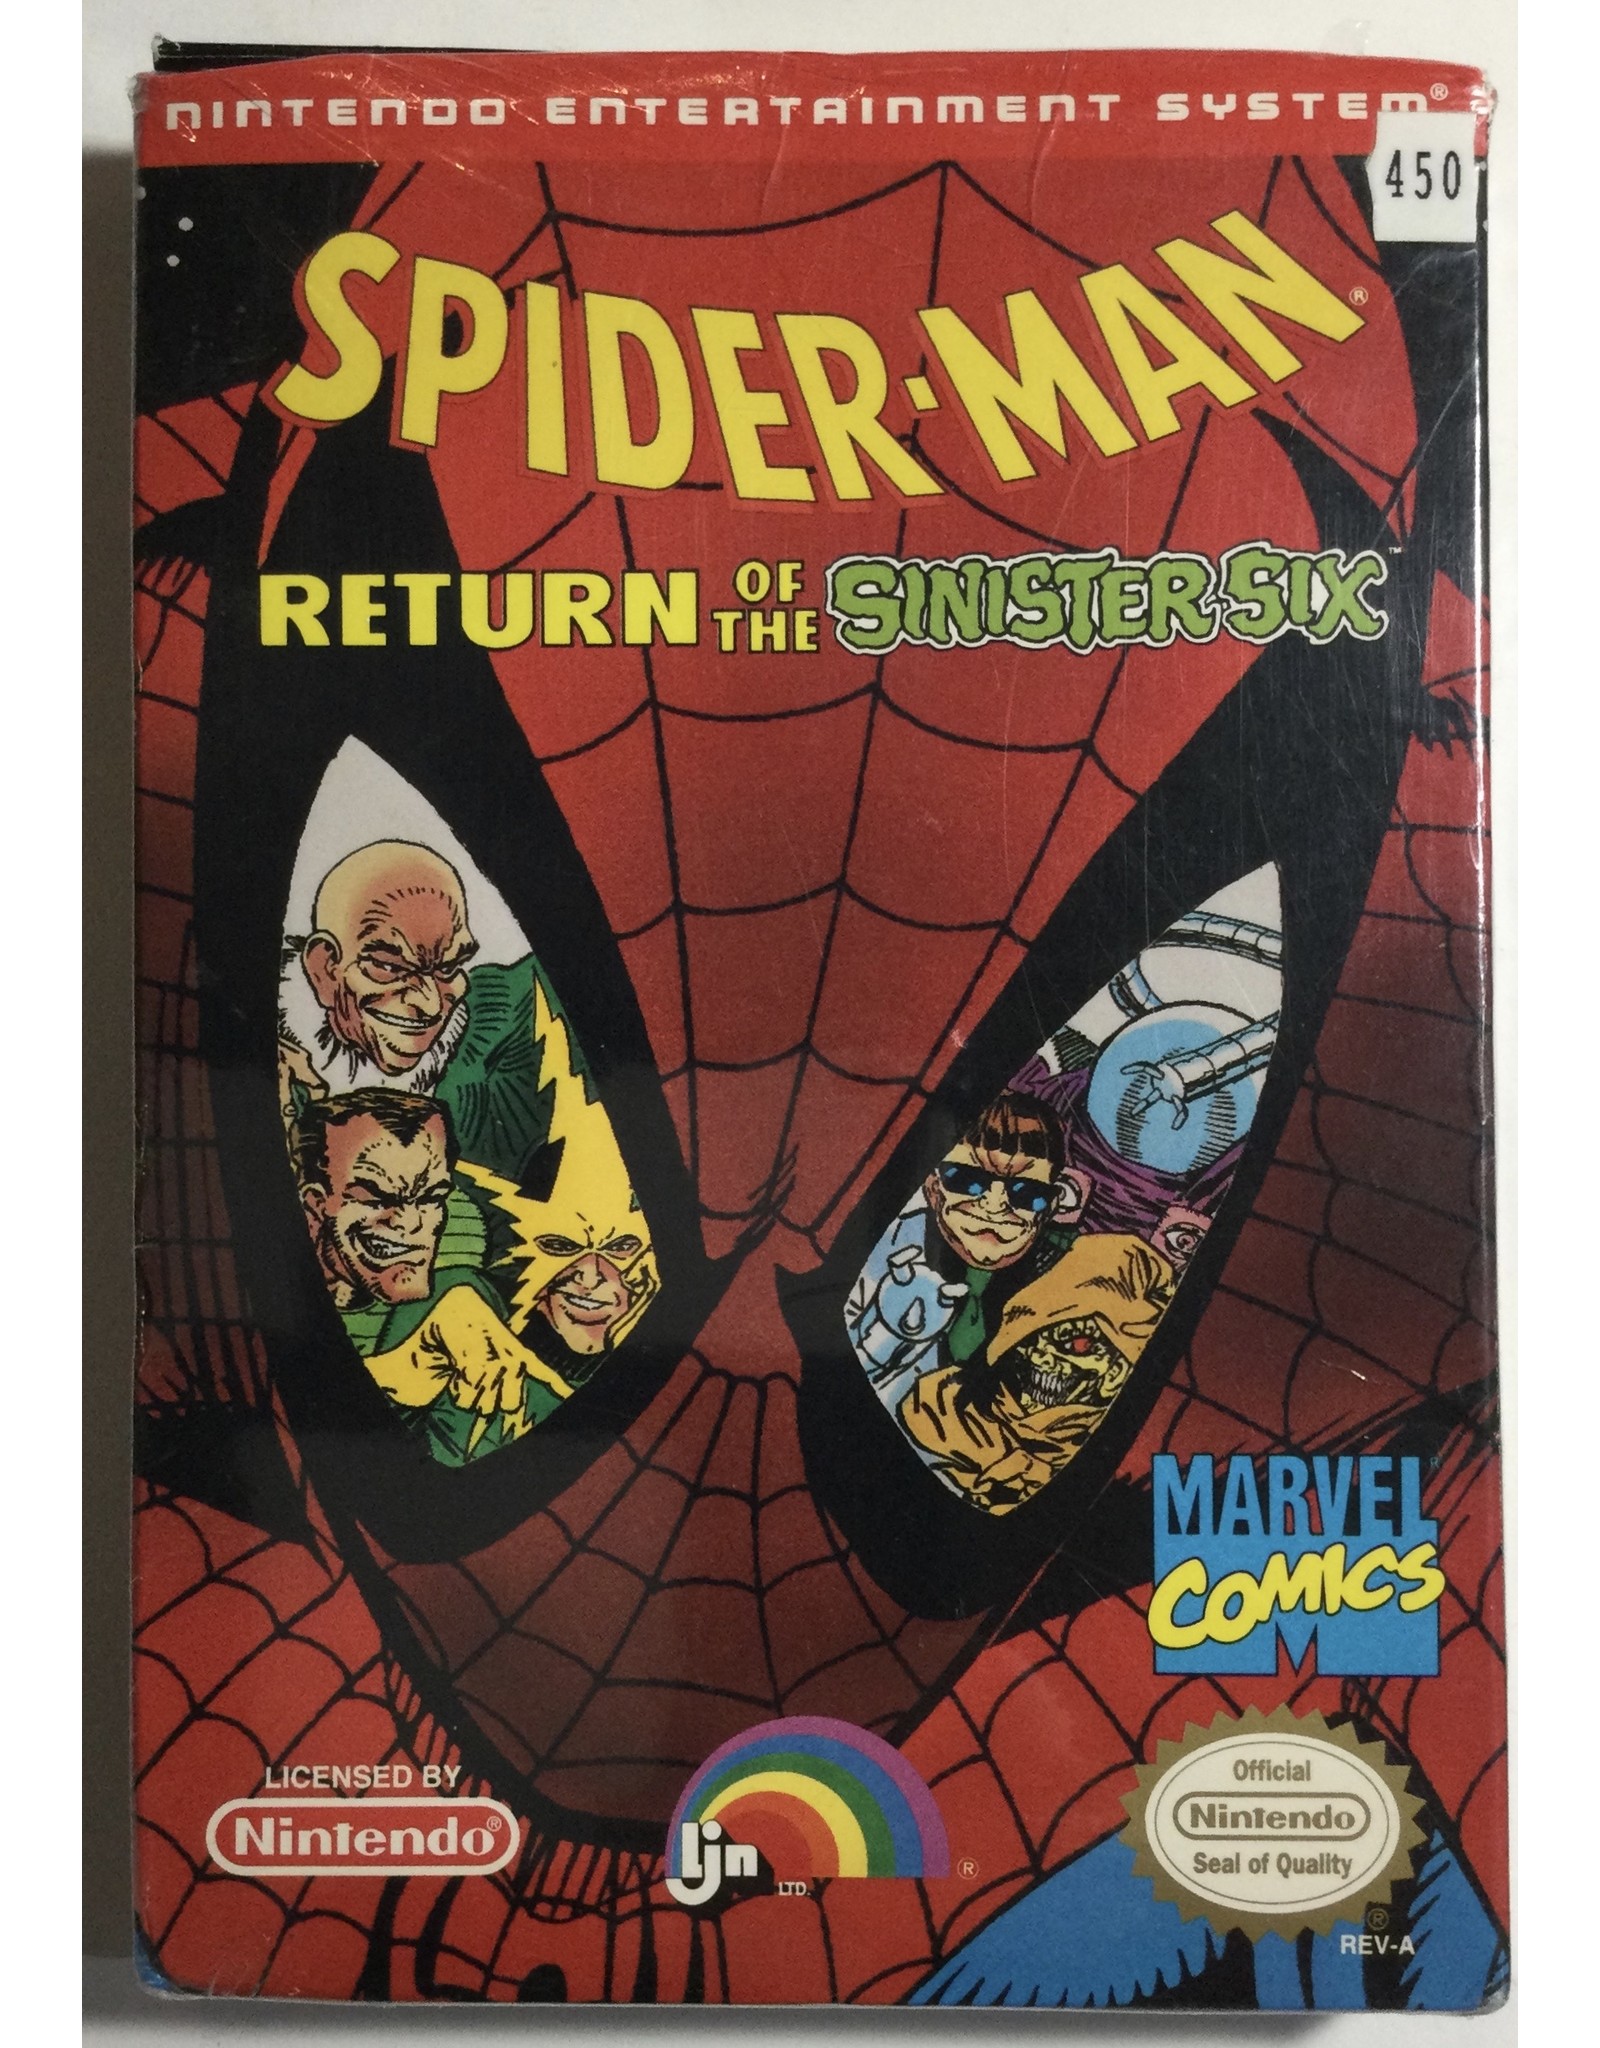 Spiderman Return of the Sinister Six for Nintendo Entertainment System (NES)  